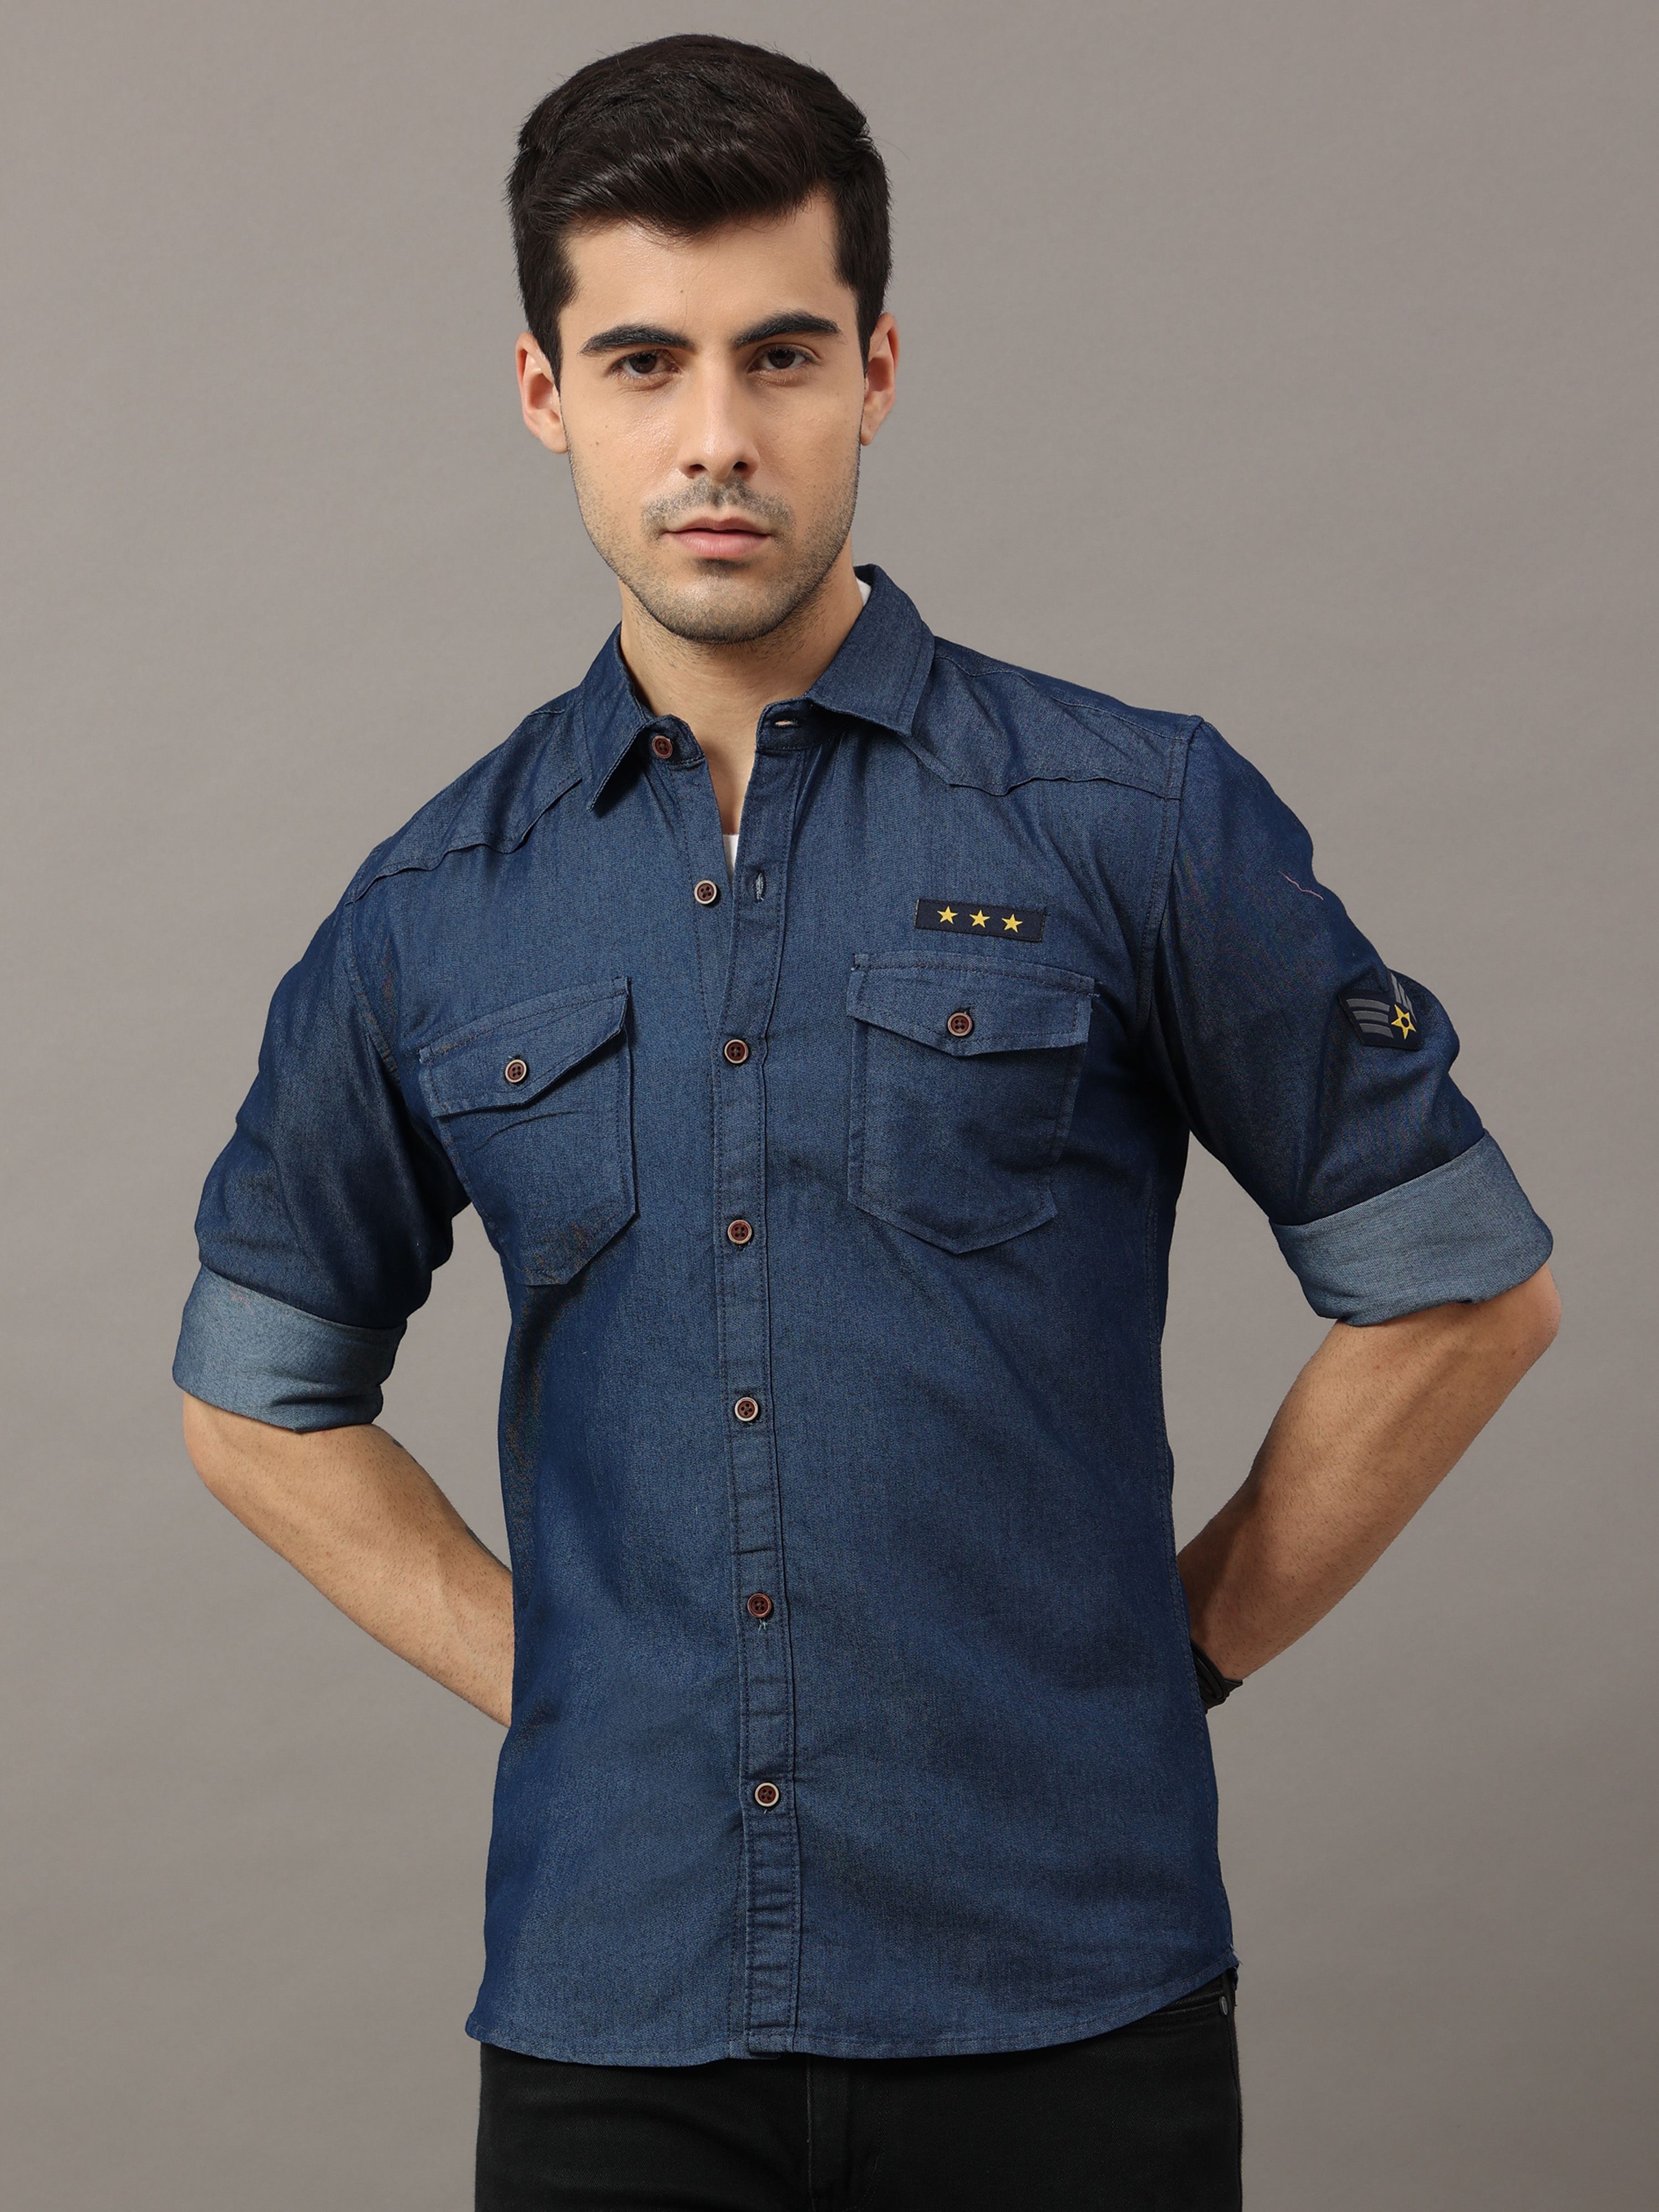     			VROJASS Denim Regular Fit Solids Full Sleeves Men's Casual Shirt - Navy Blue ( Pack of 1 )